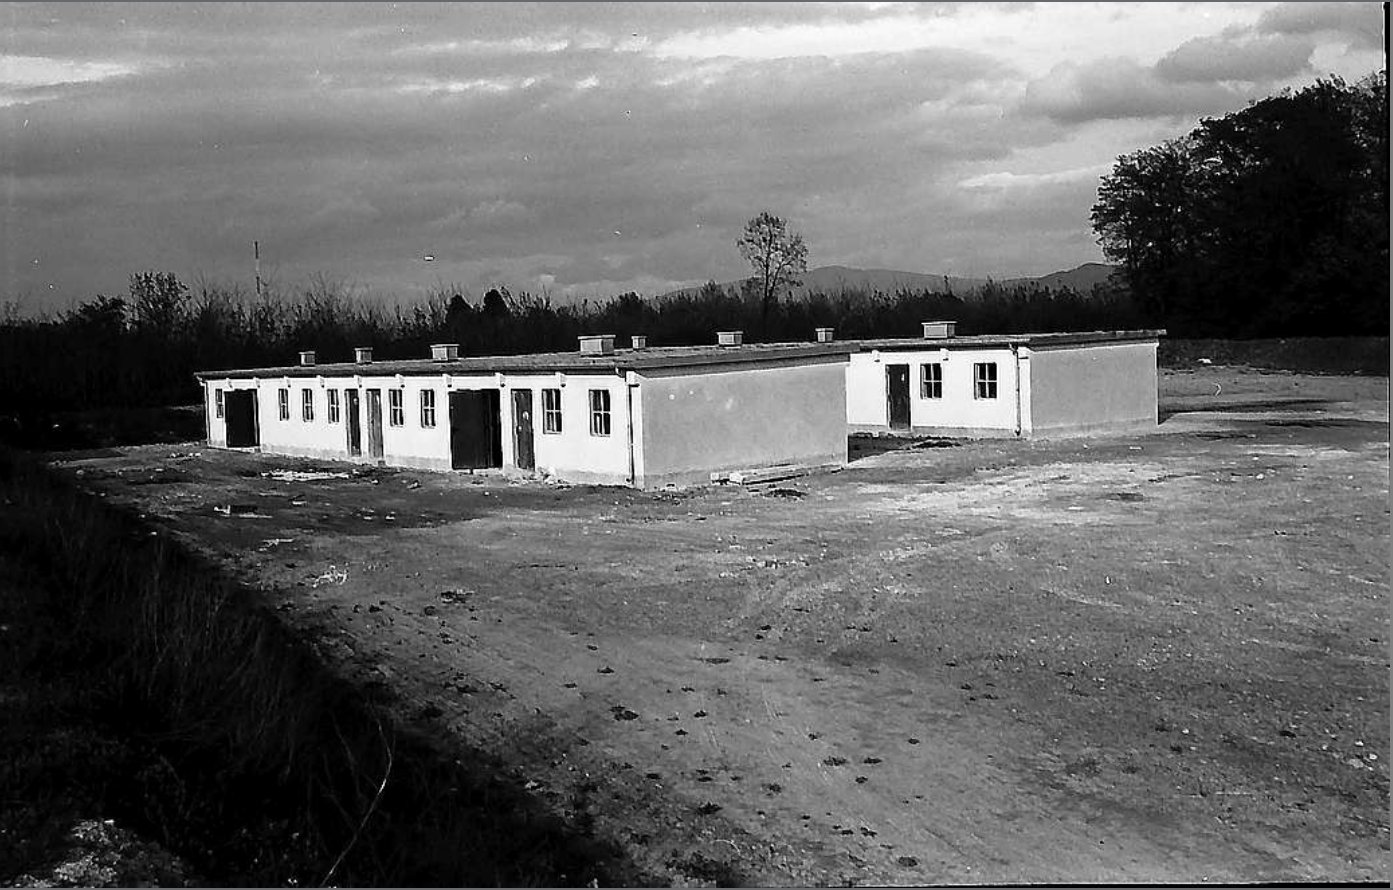 Landesarchiv Baden-Württemberg , New housing for “Gypsies” at Mundenhof, Freiburg (1965), available here
